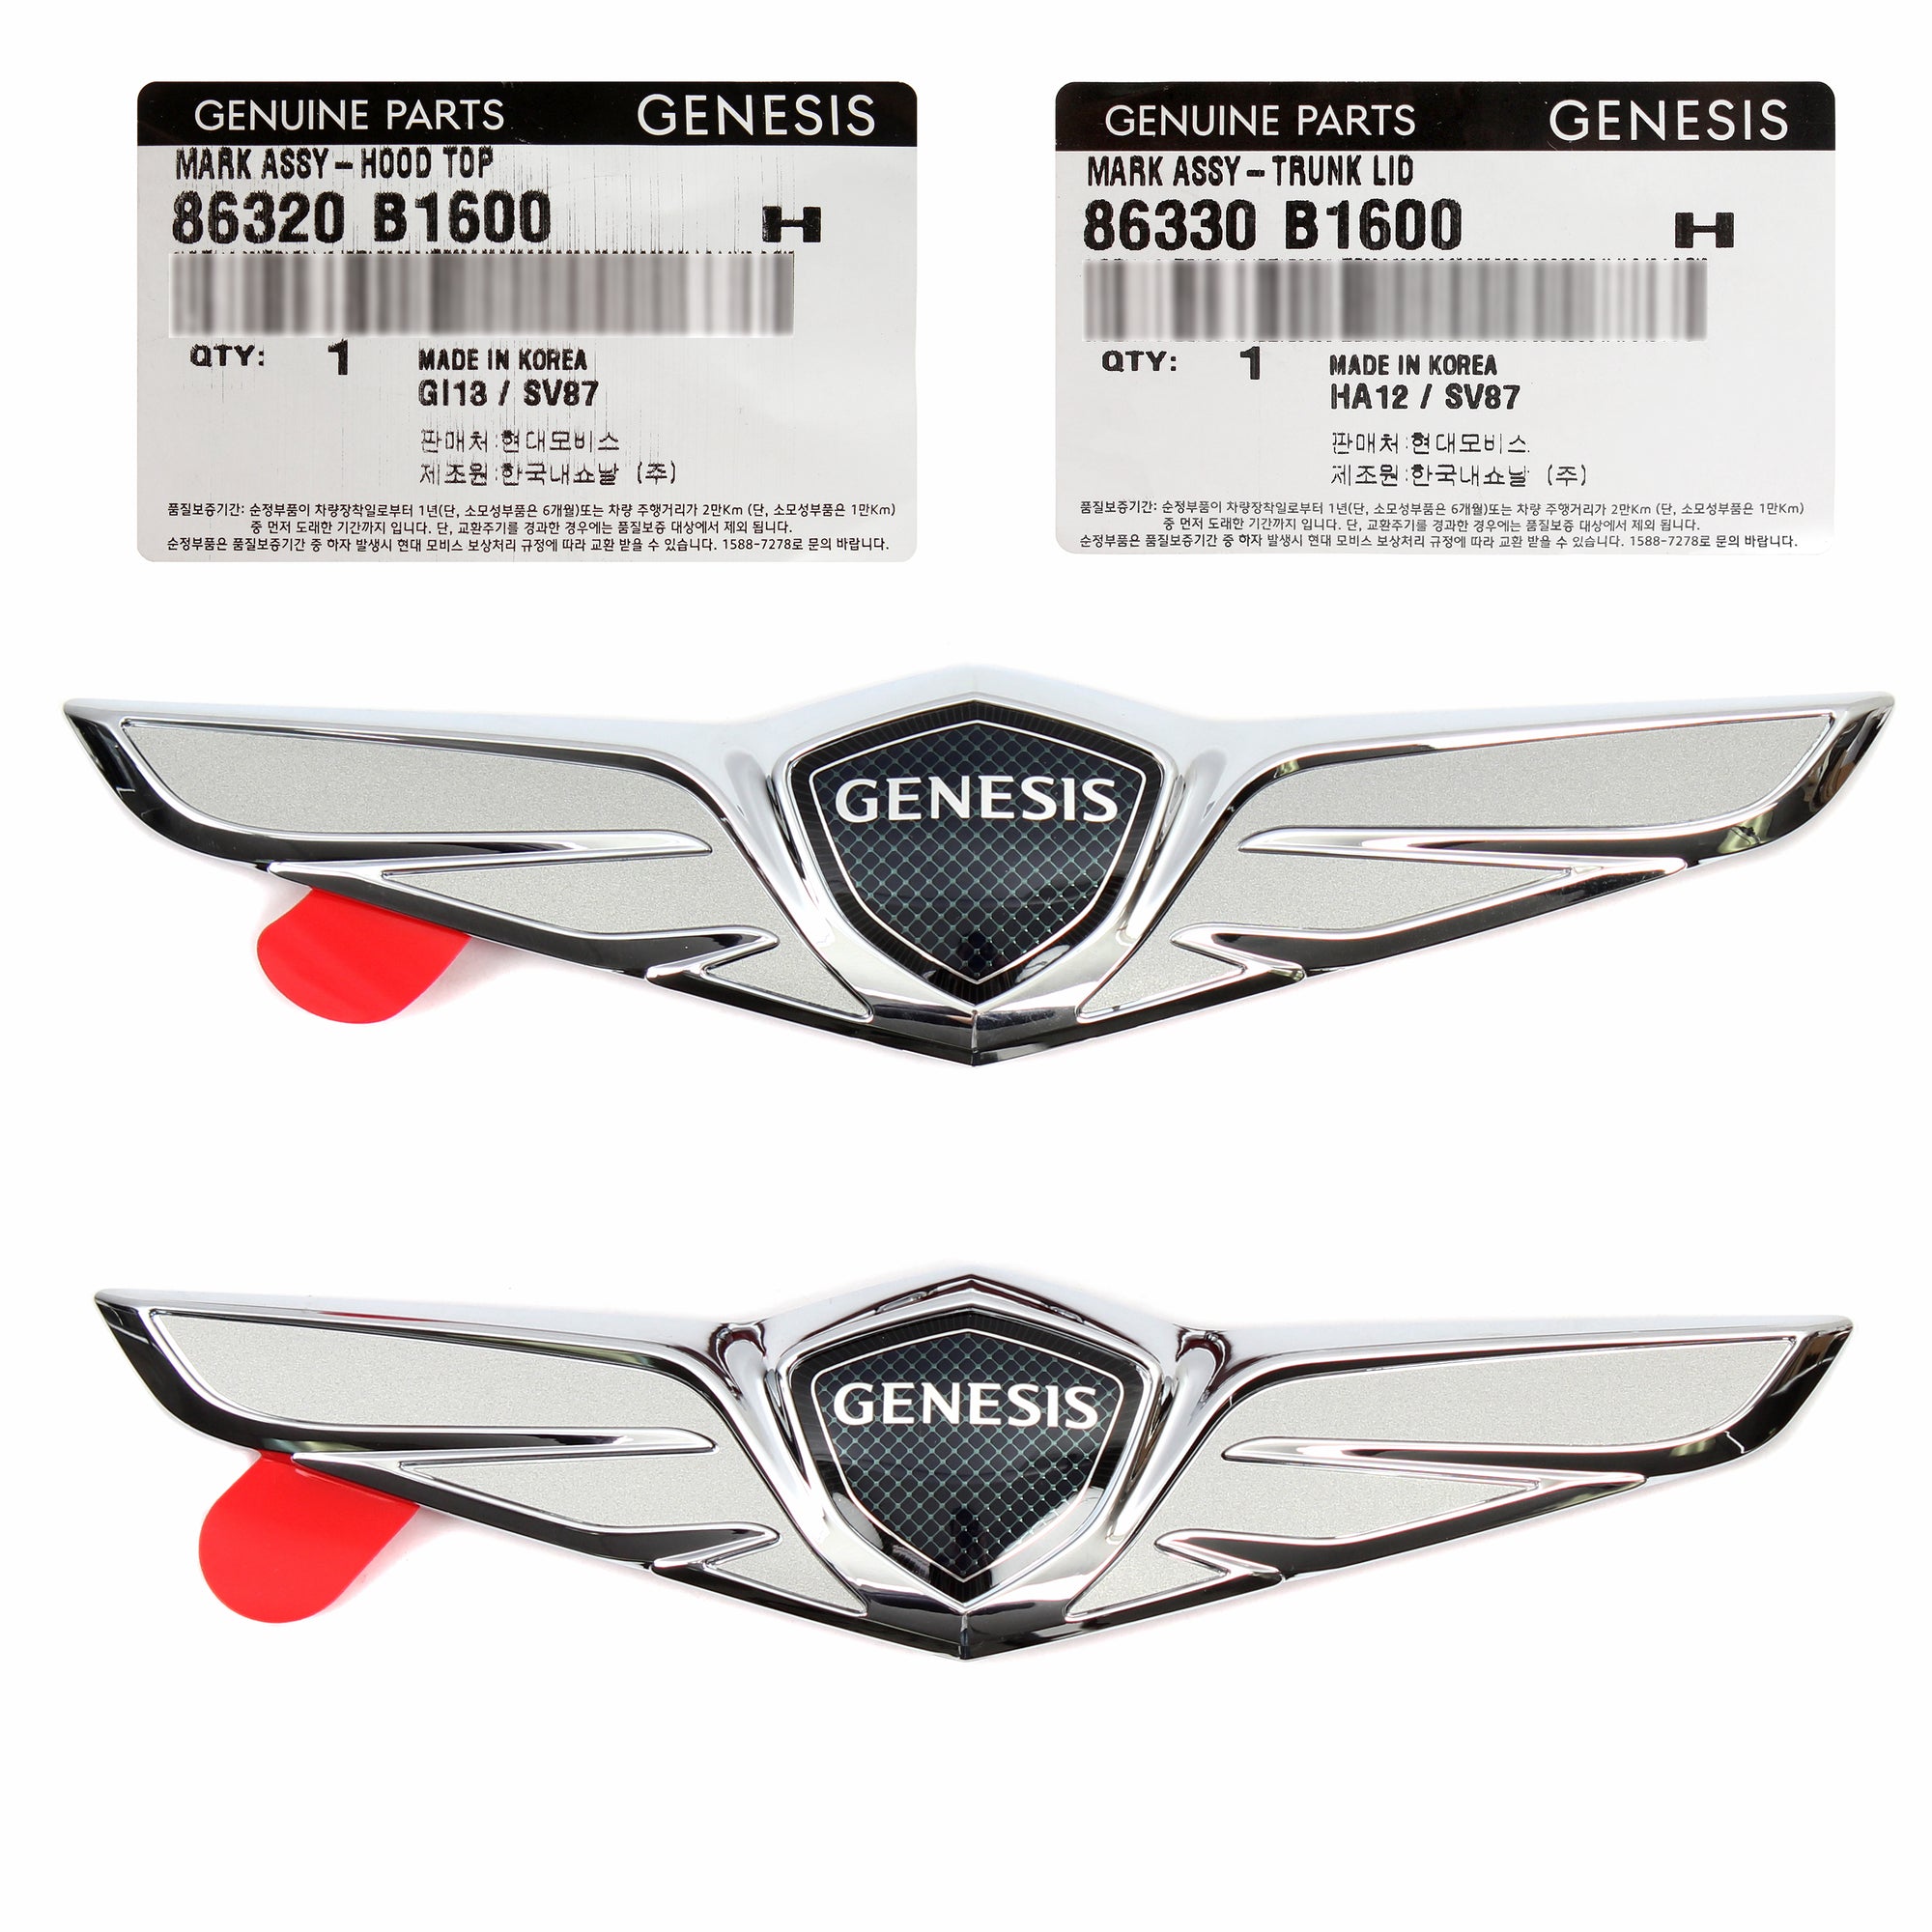 GENUINE Front Hood & Trunk Emblem Badges for 2018-2020 Genesis G80 86320B1600 86330B1600